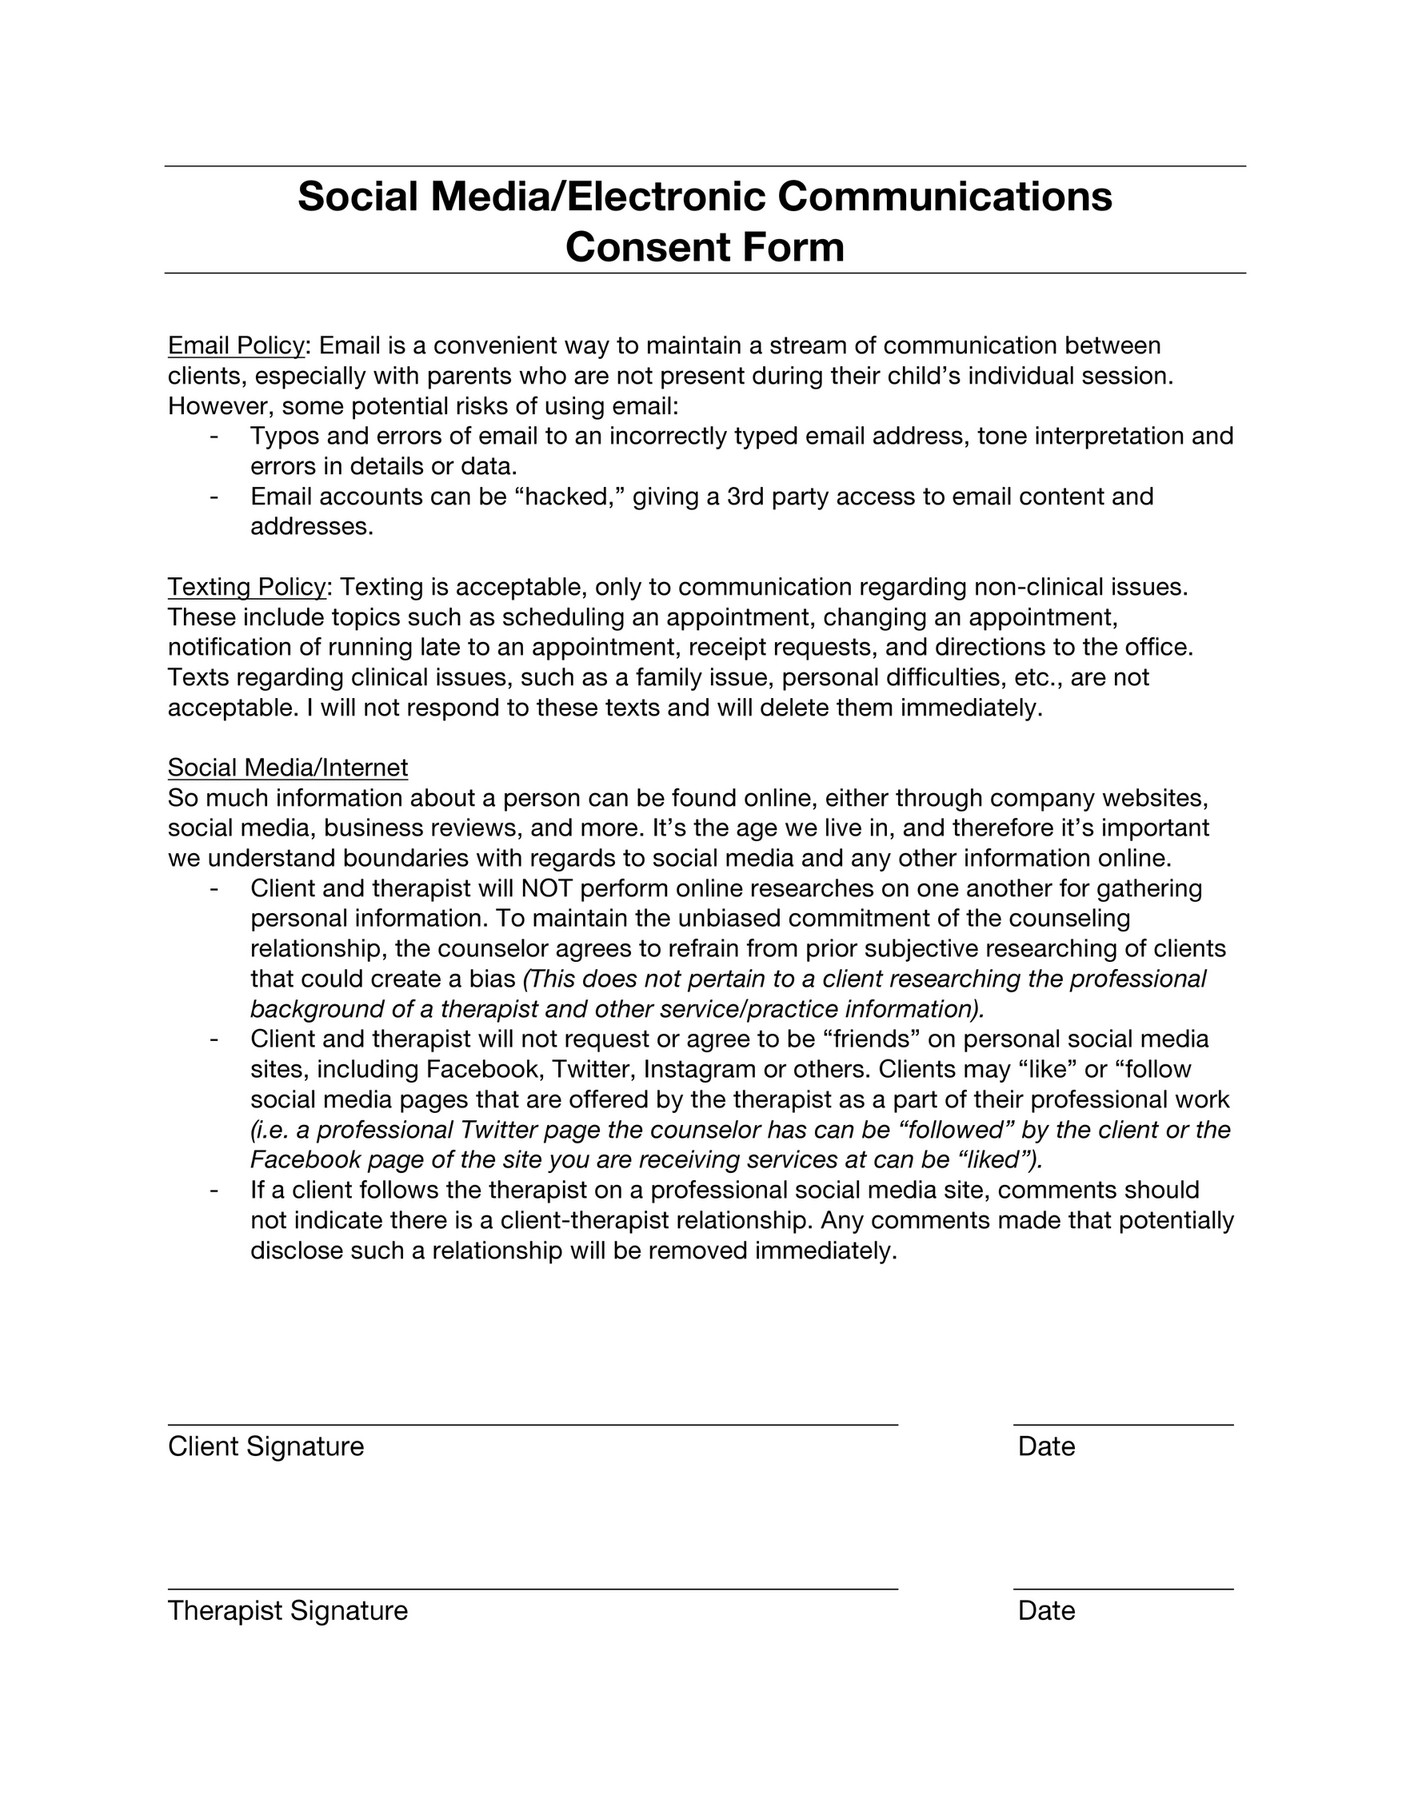 printable-social-media-consent-form-template